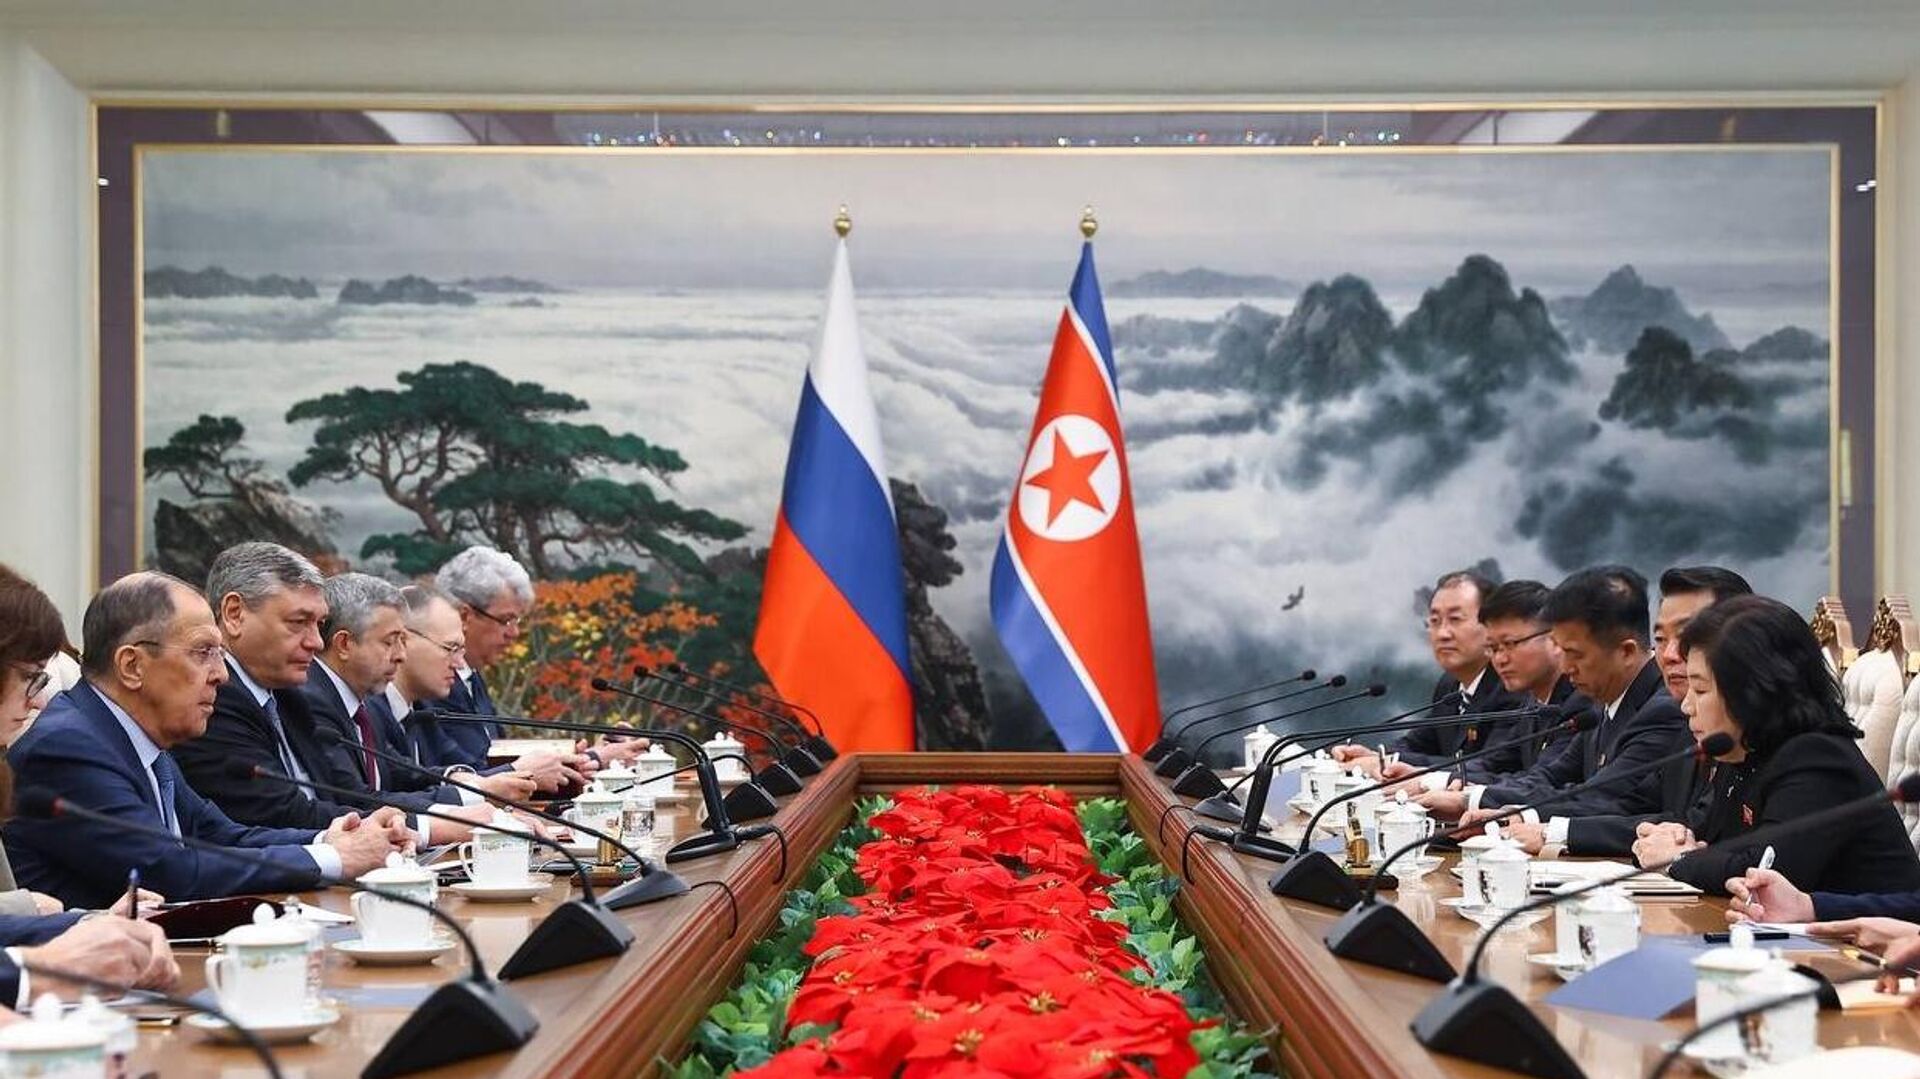 Russia calls North Korea “fraternal people”